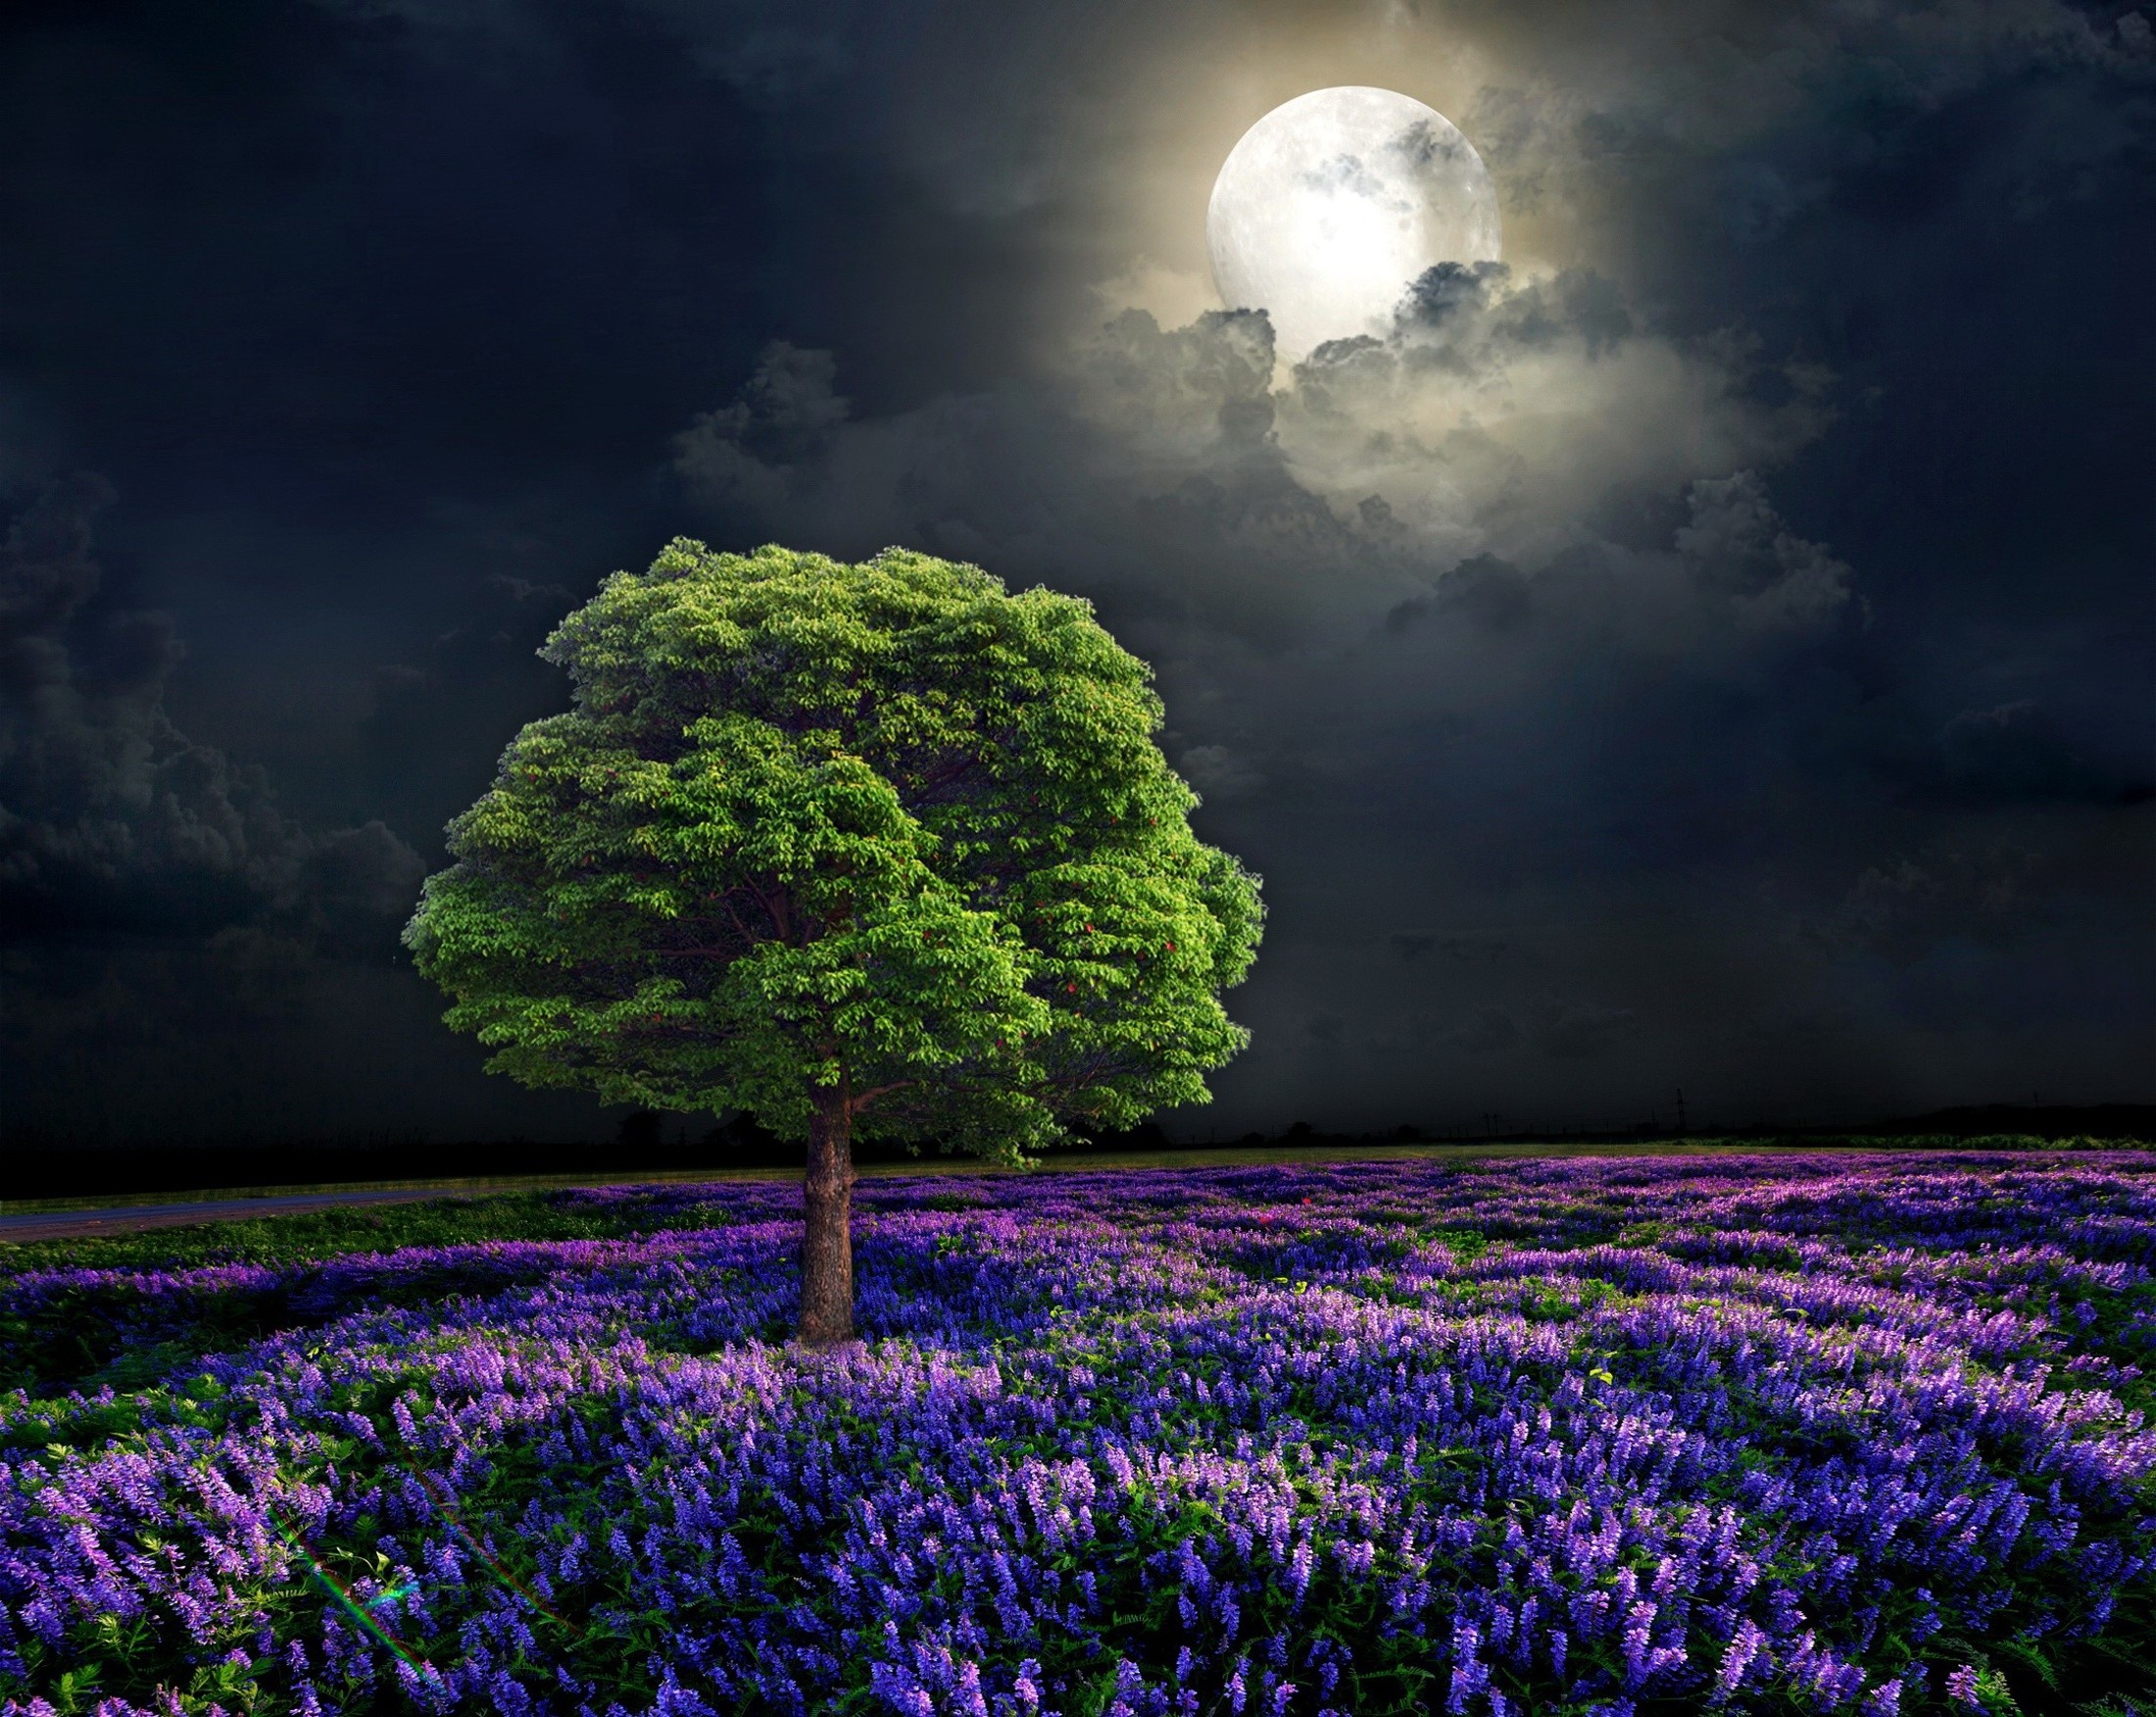 night nature wallpaper hd,natural landscape,nature,sky,lavender,purple